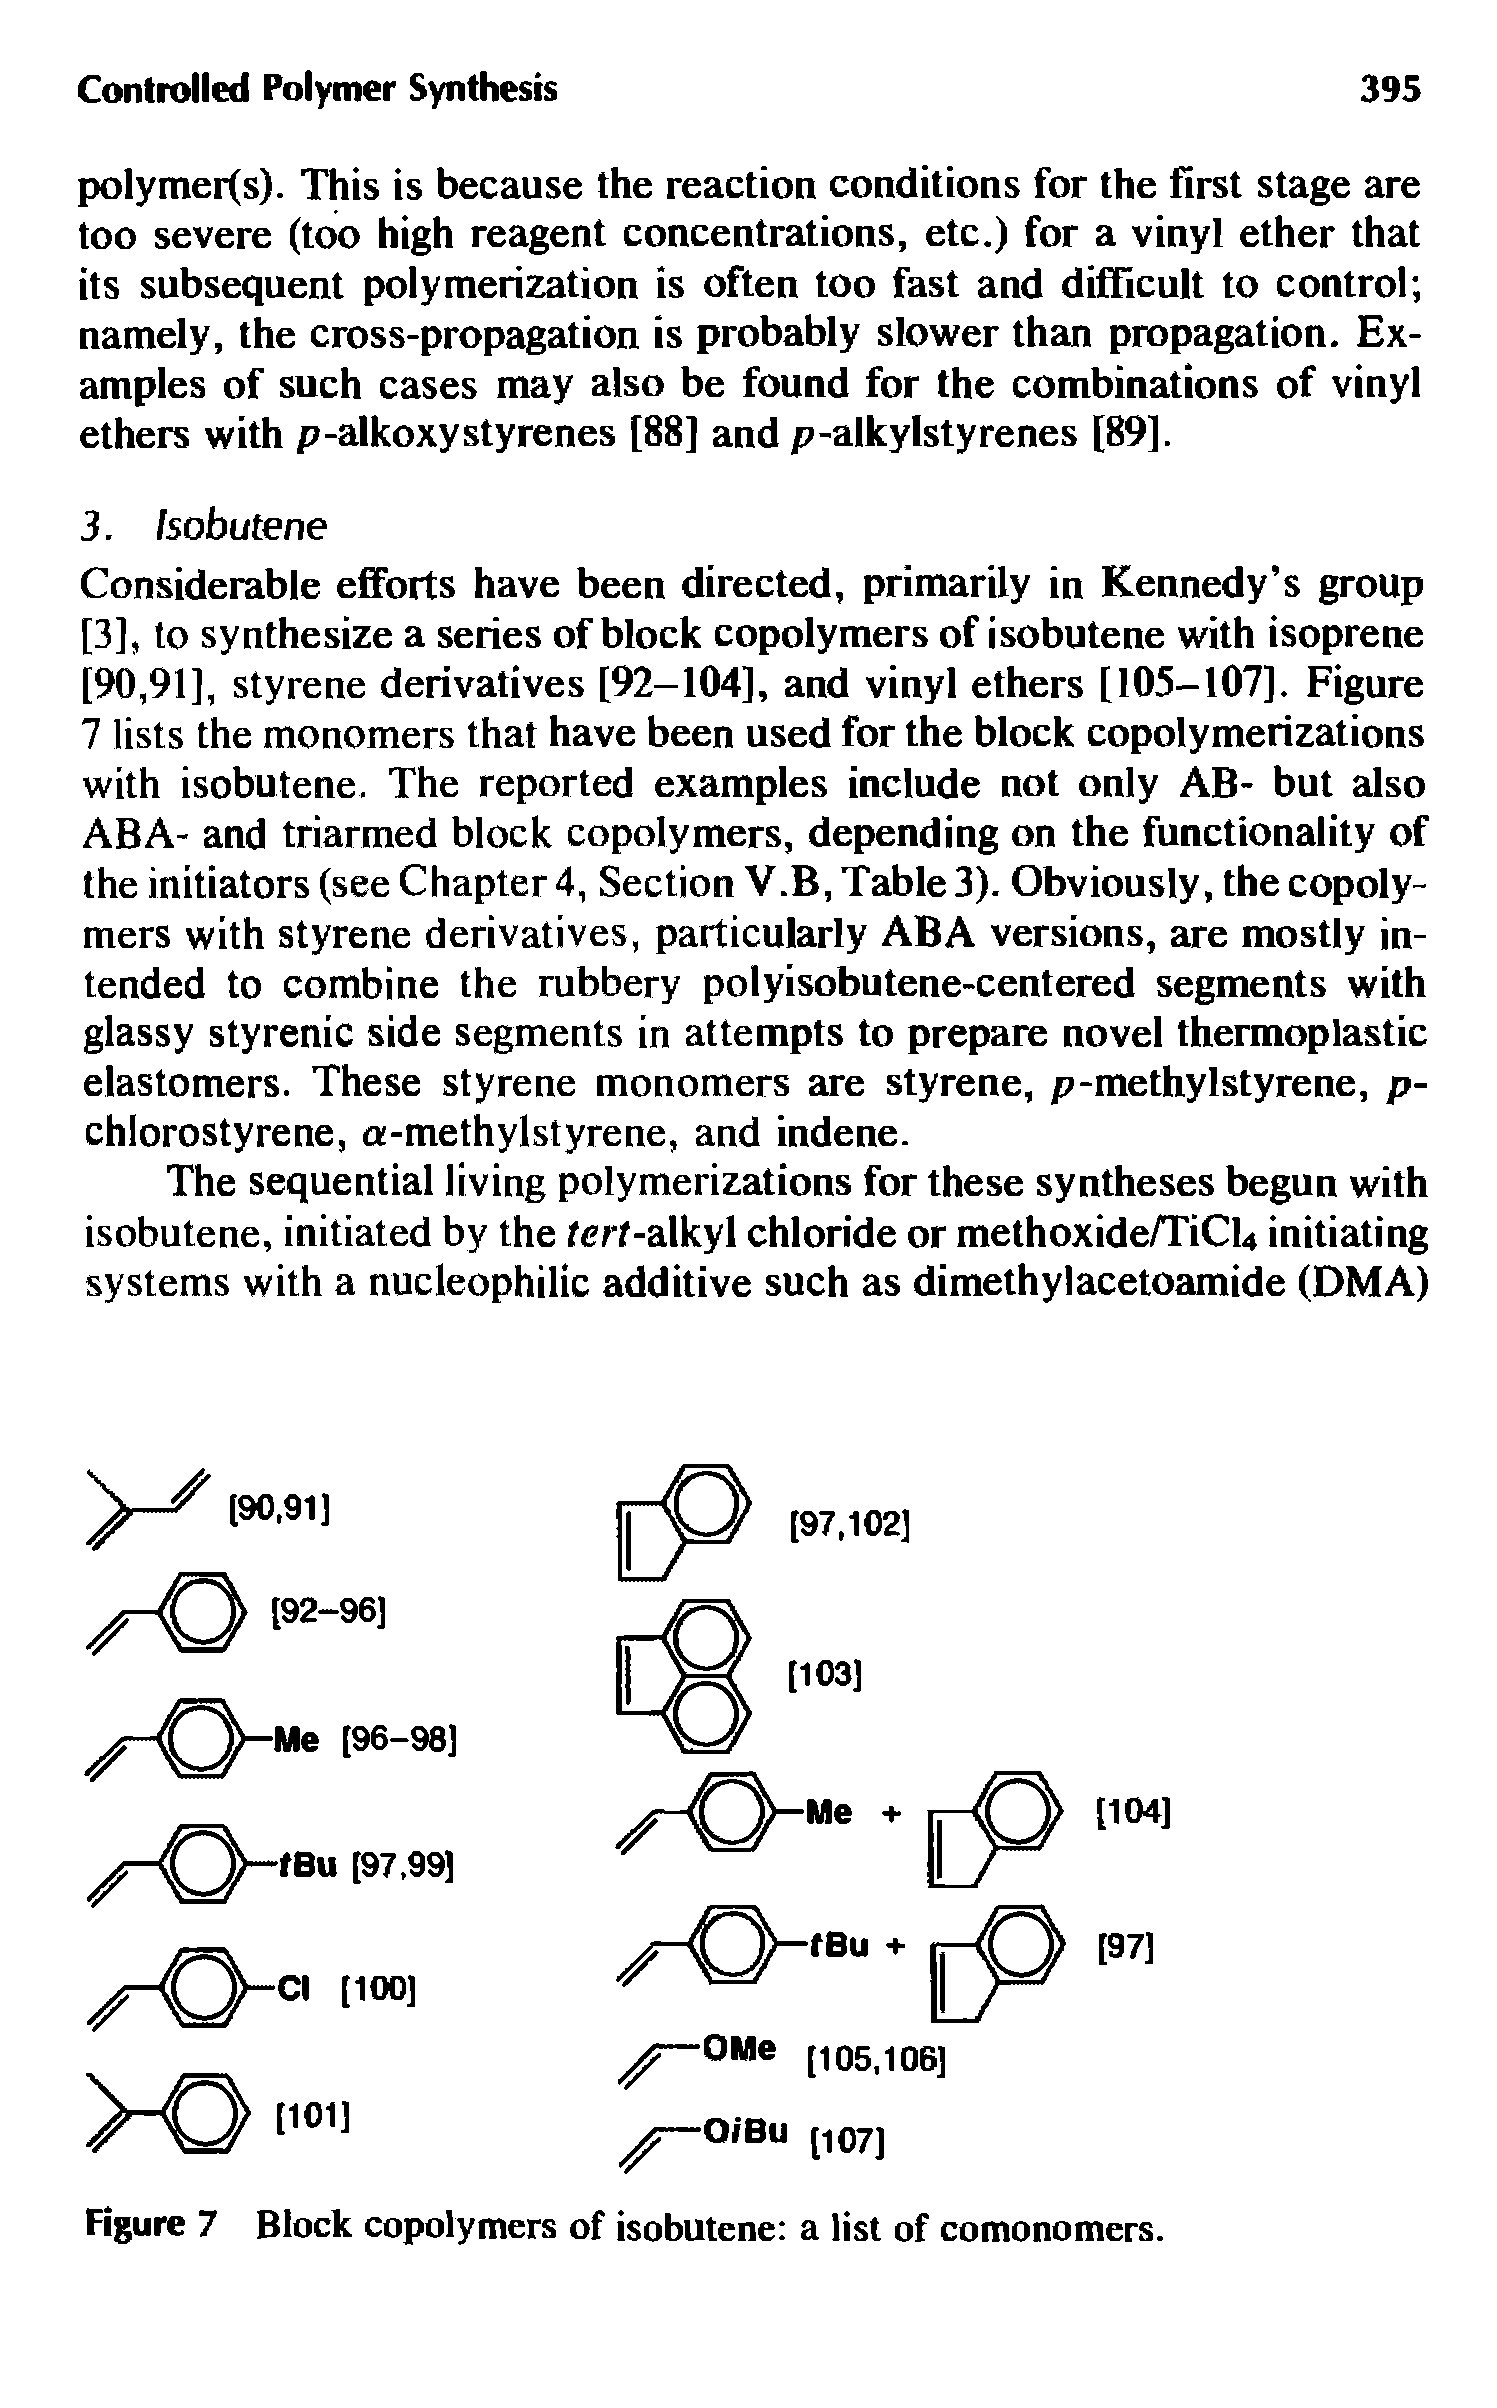 Figure 7 Block copolymers of isobutene a list of comonomers.